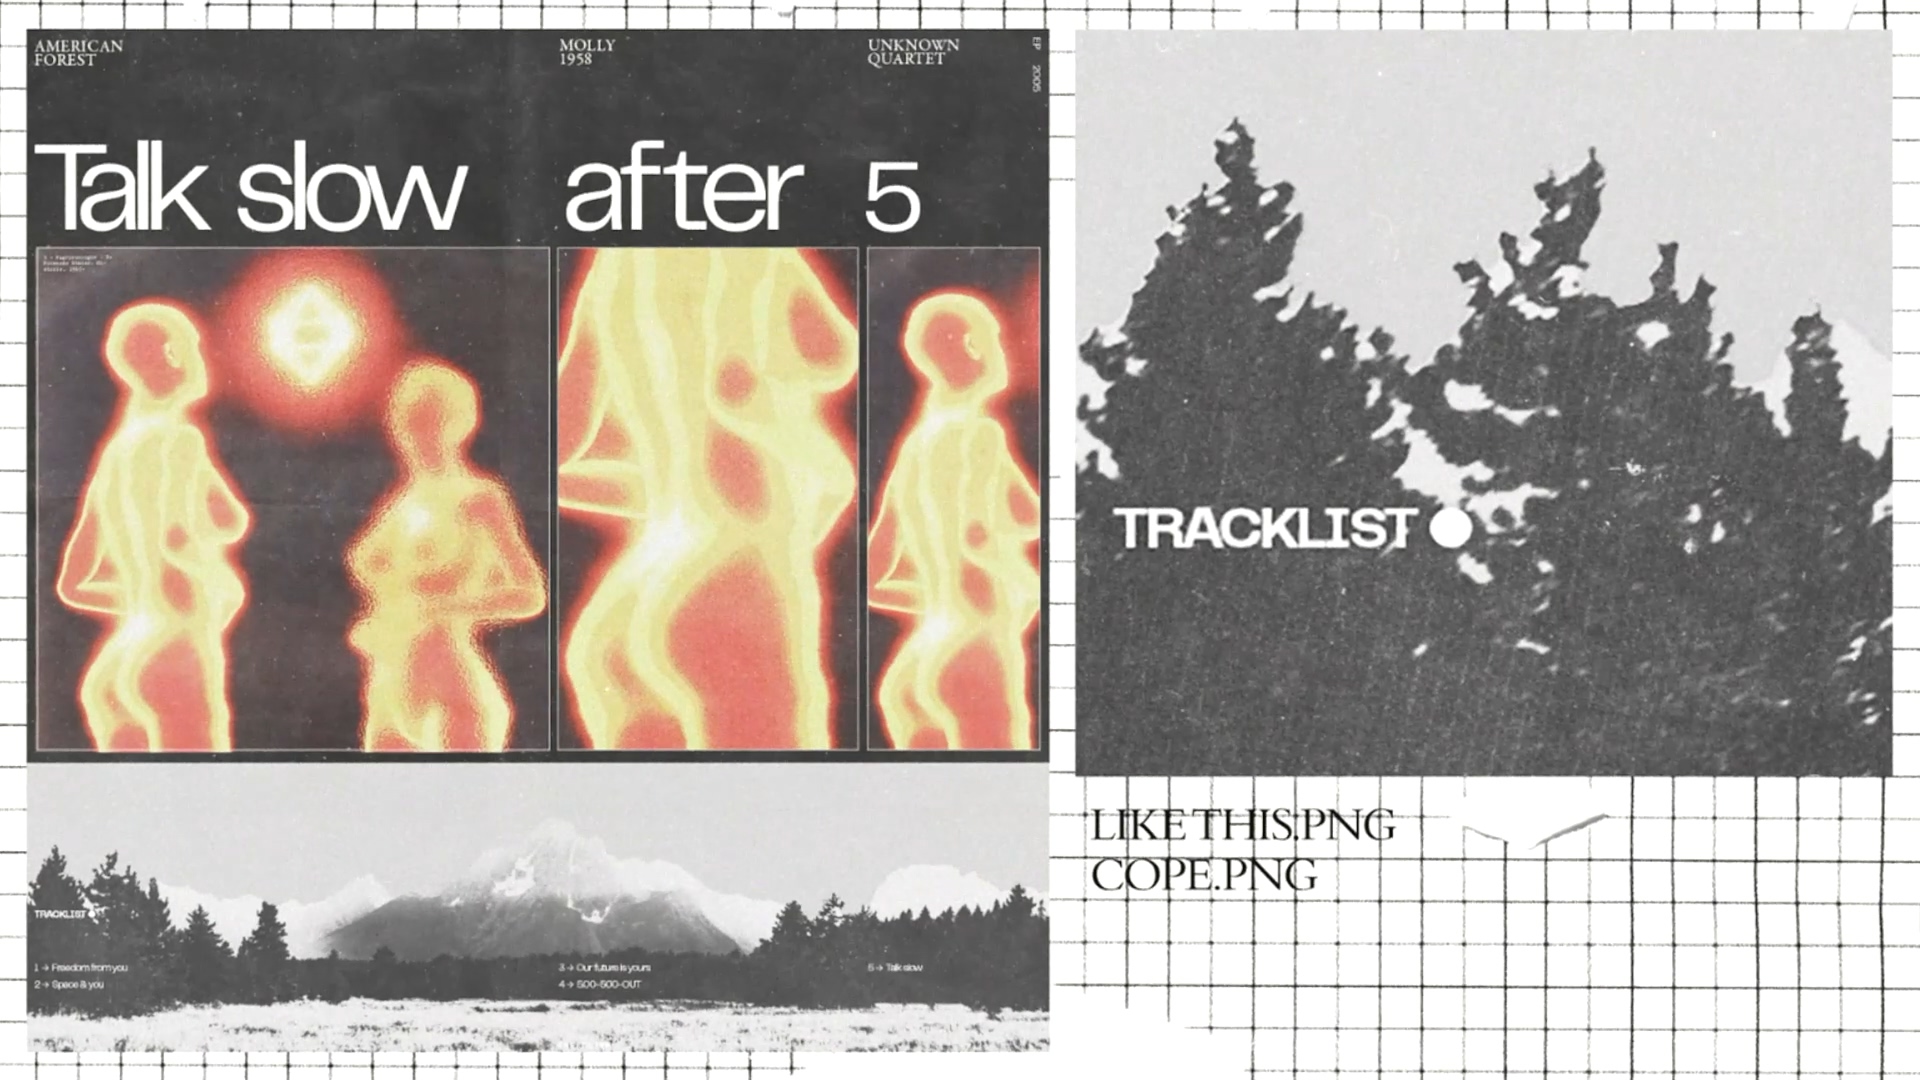 6K高清专辑封面灰尘噪点纸张纹理做旧设计素材 Album C